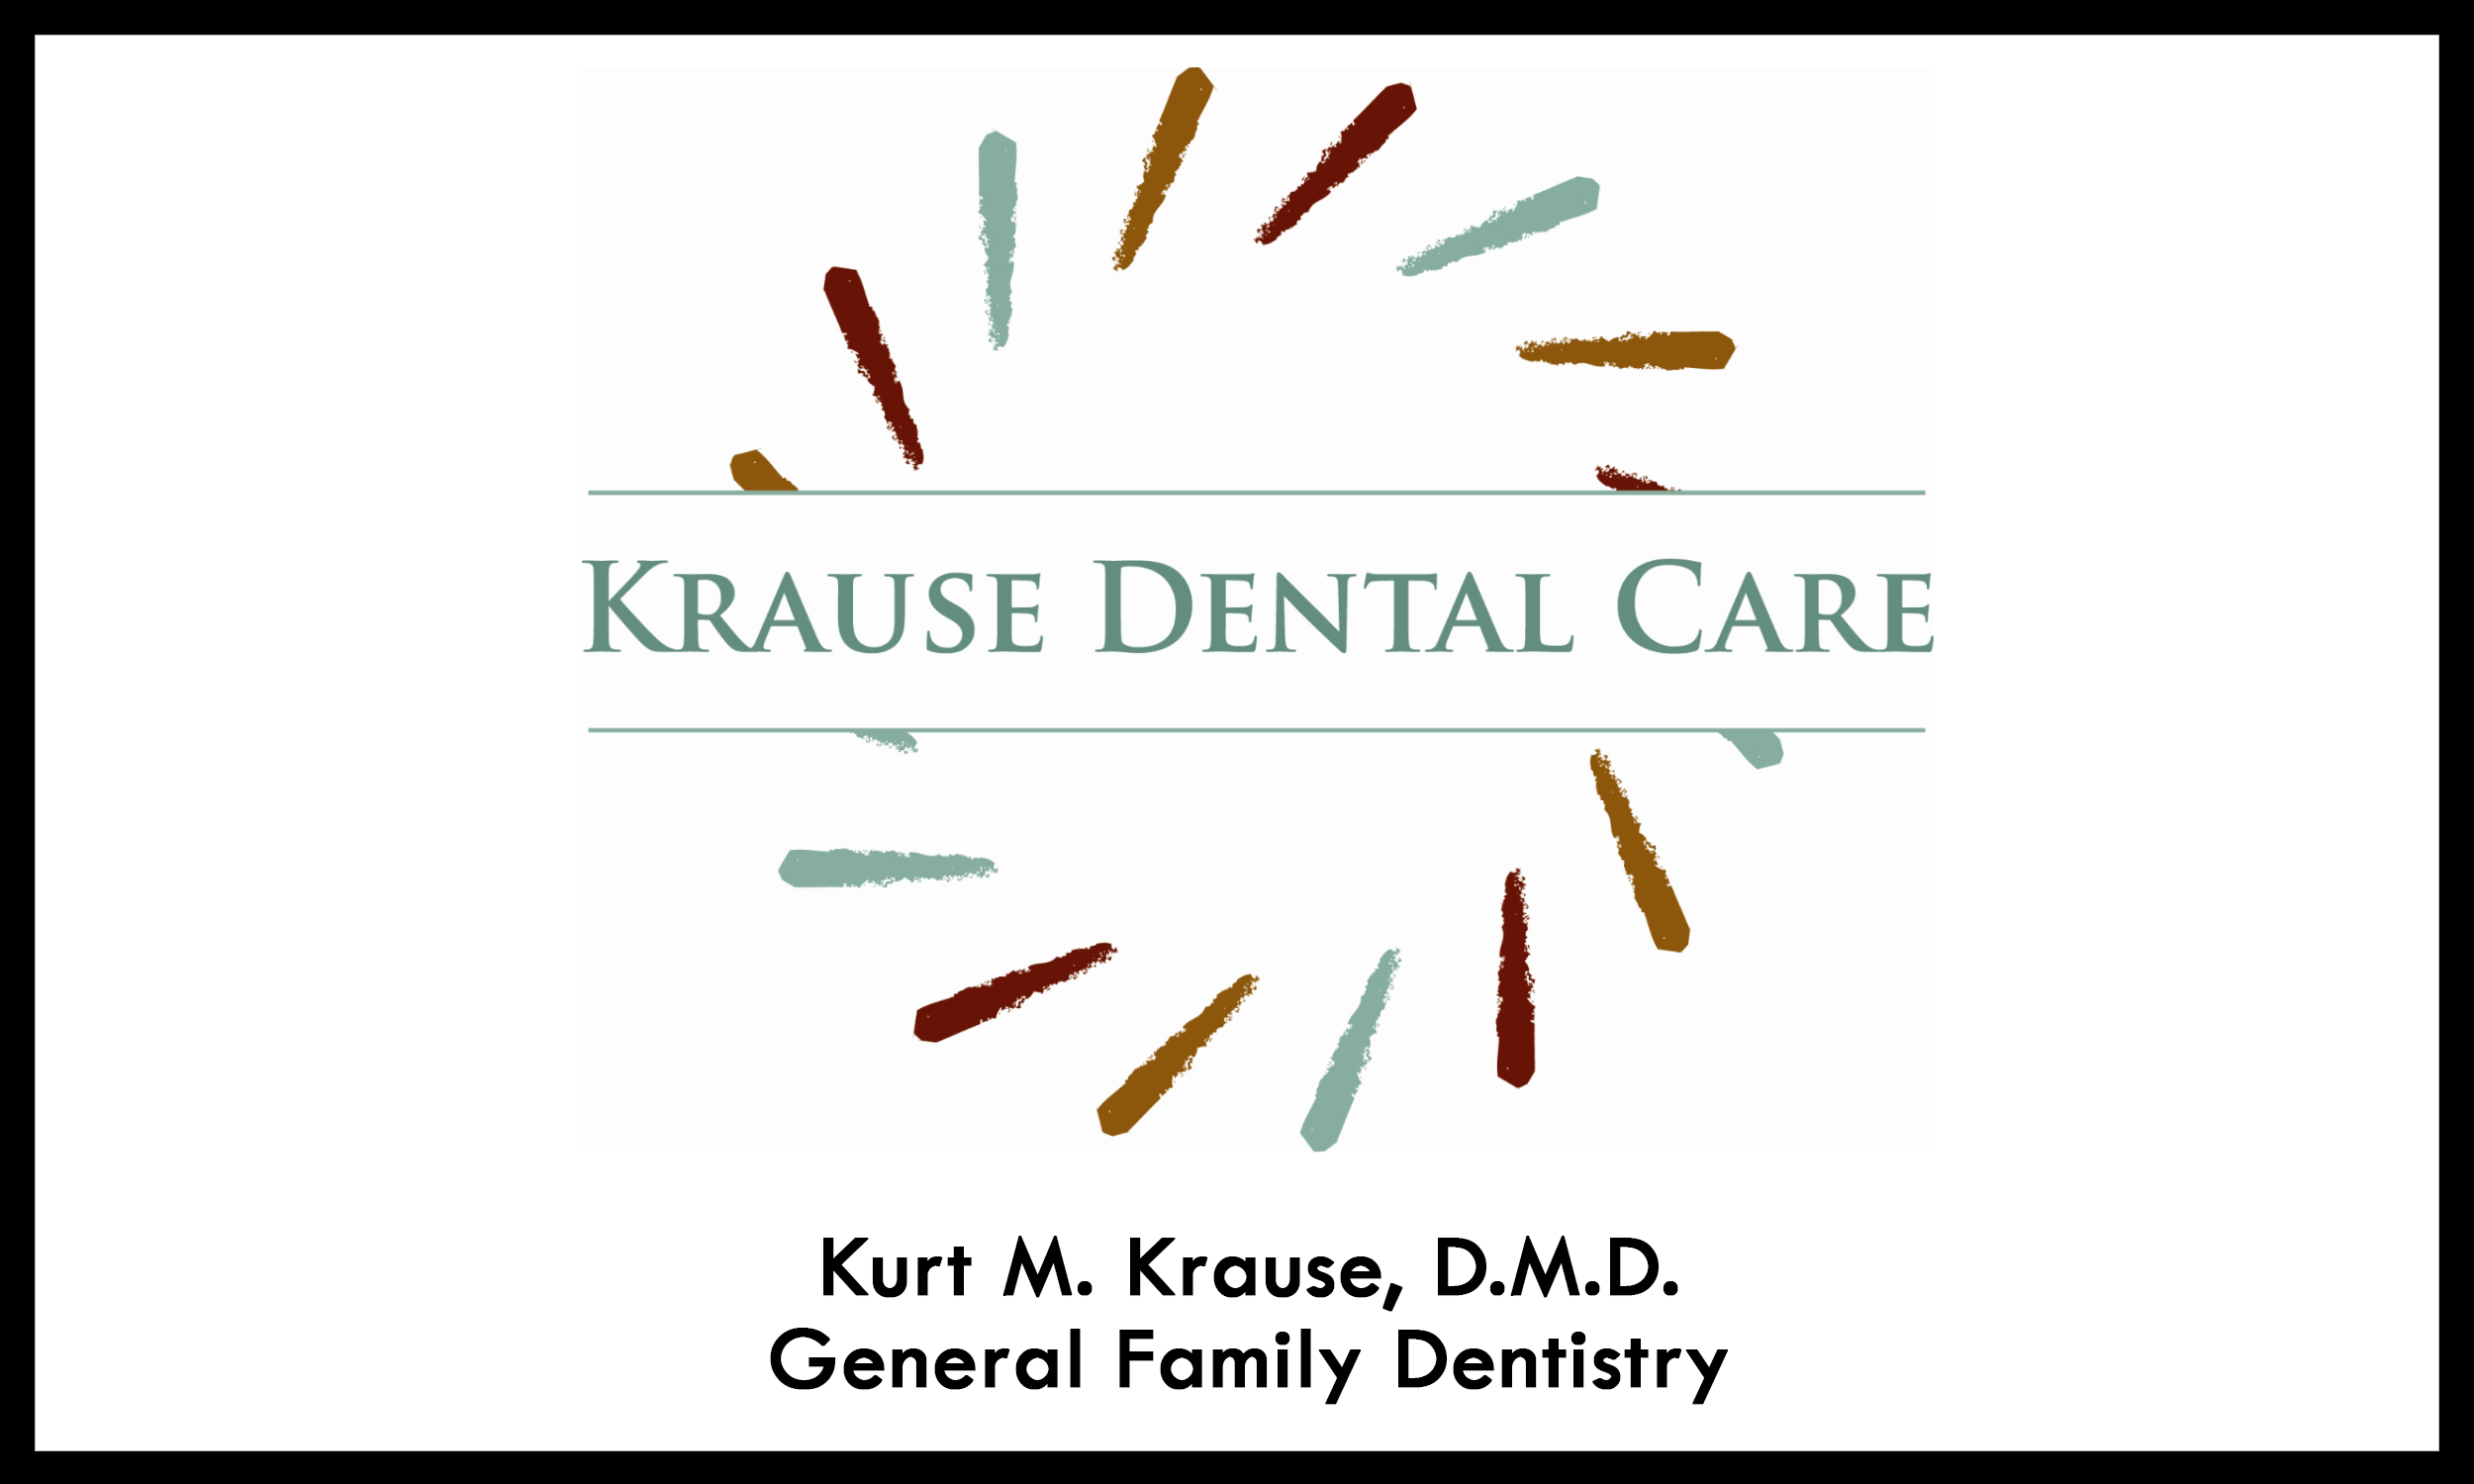 Krause Dental Care